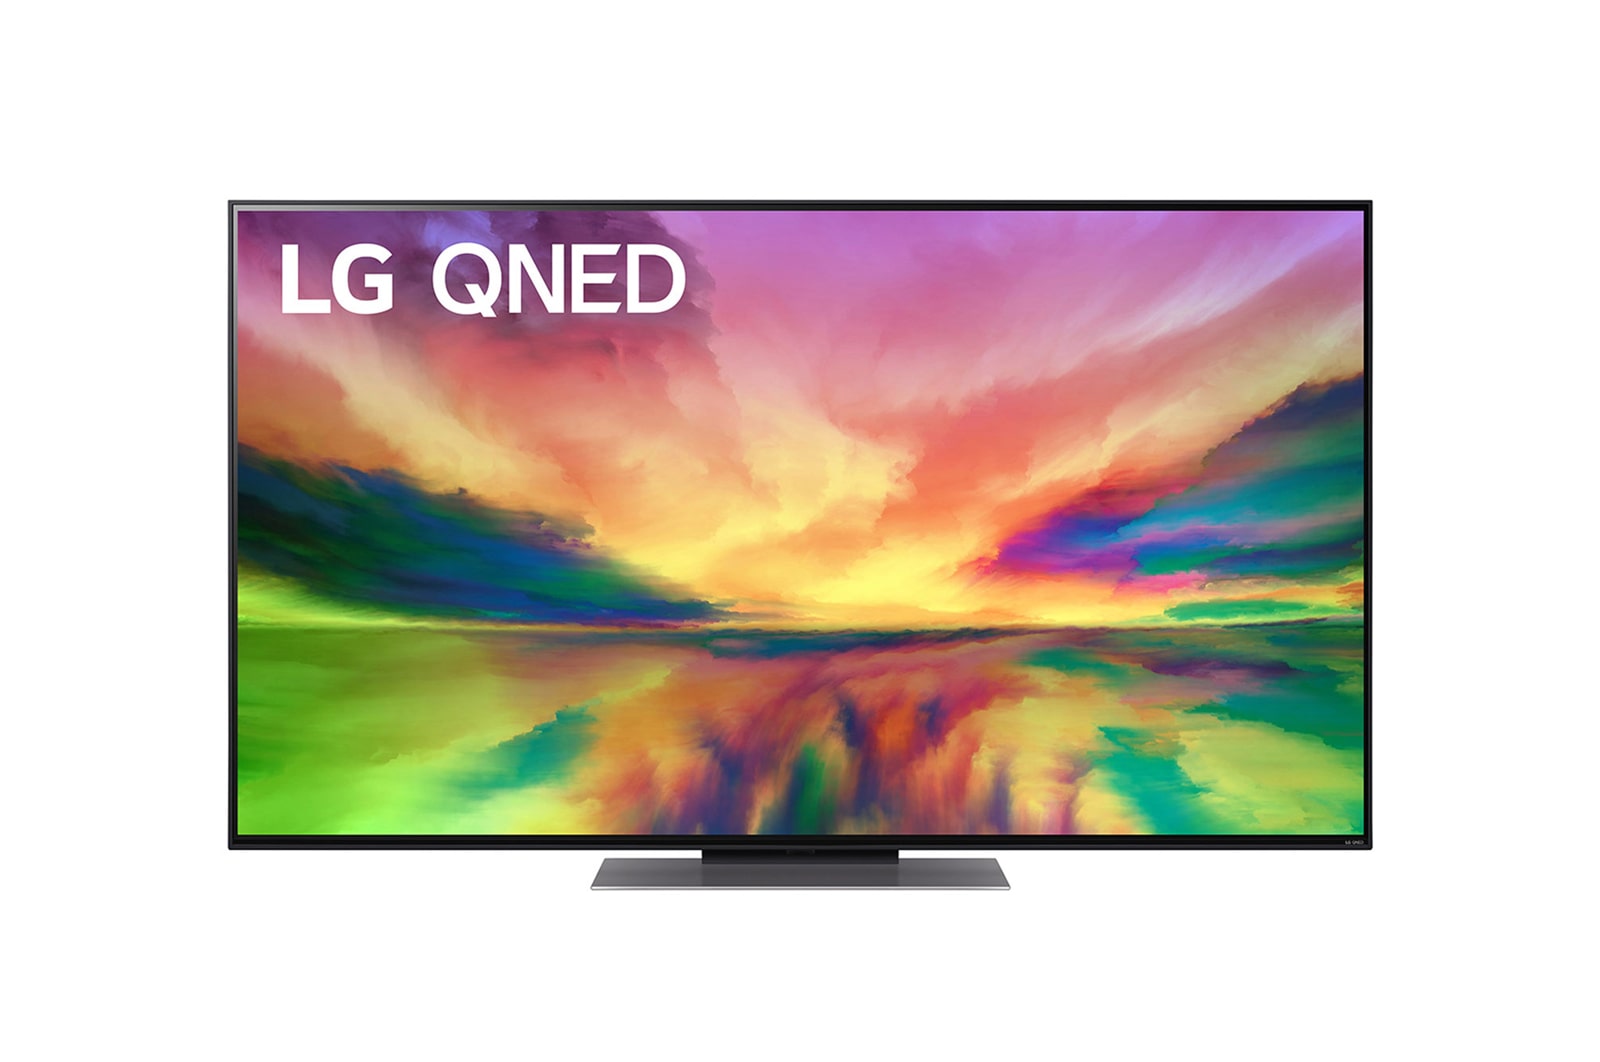 LG Telewizor LG 55” QNED 4K Smart TV ze sztuczną inteligencją, 55QNED82, 55QNED823RE